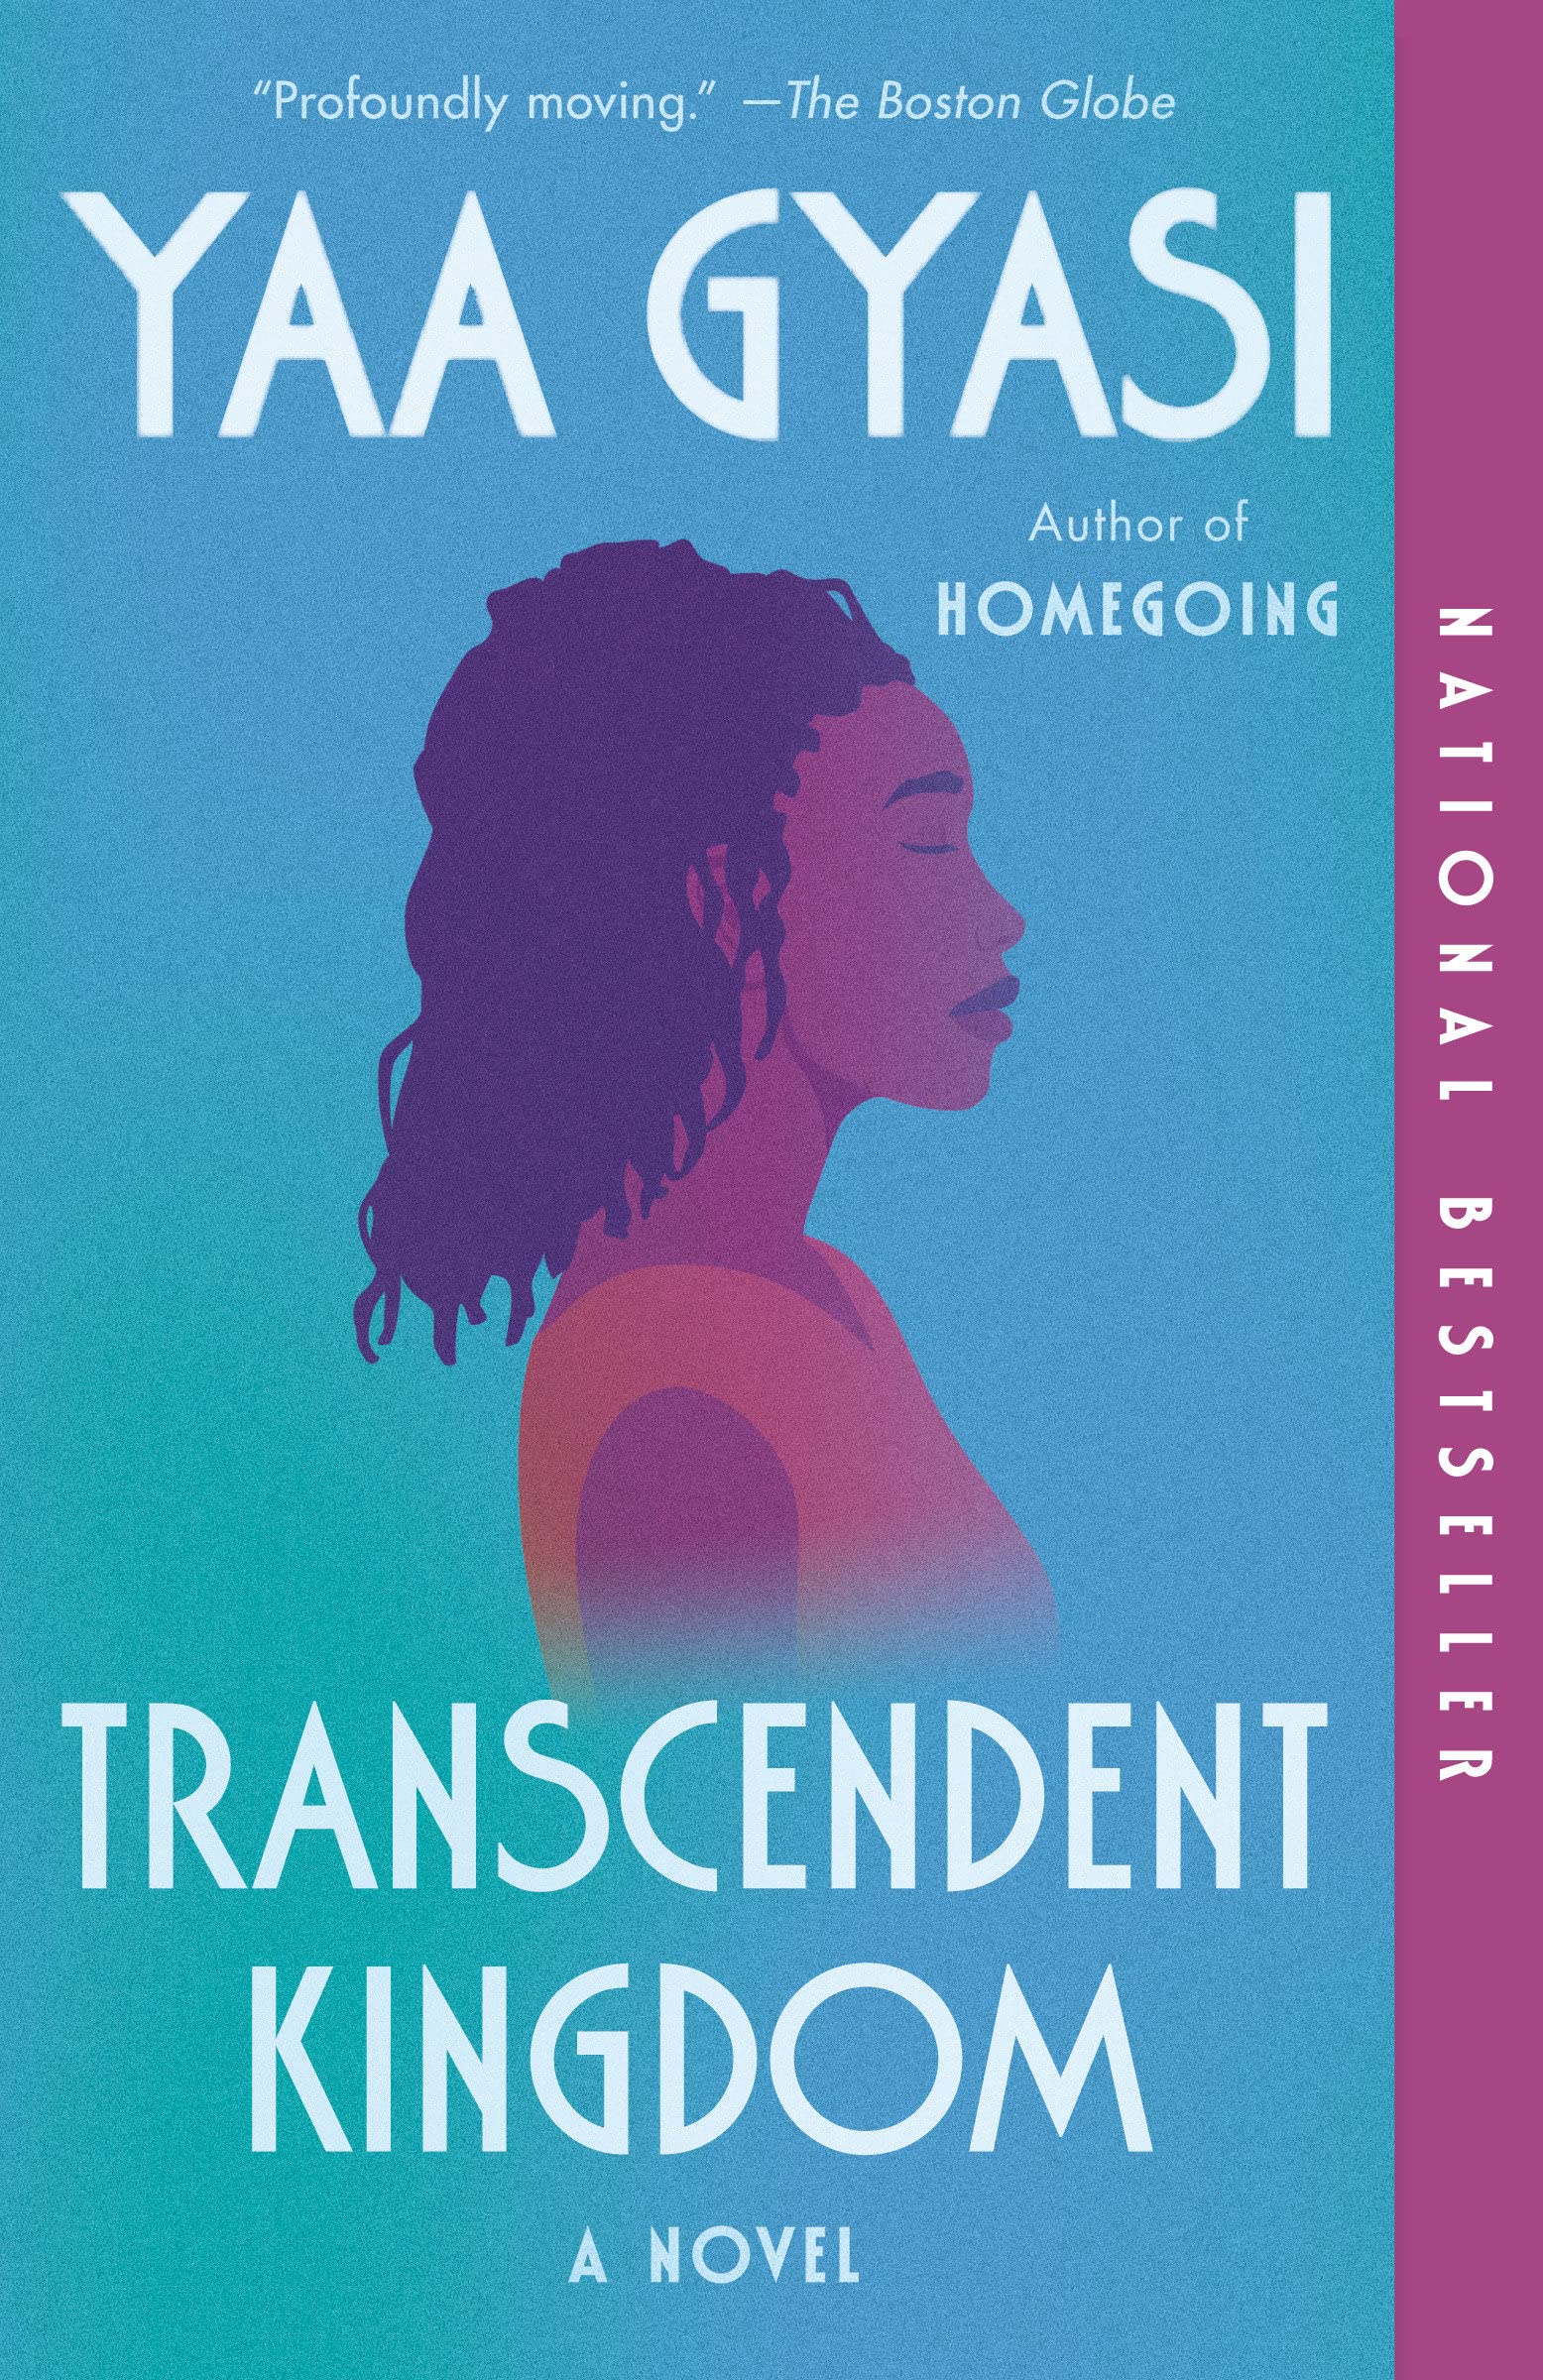 Book Cover: Transcendent Kingdom, by Yaa Gyasi